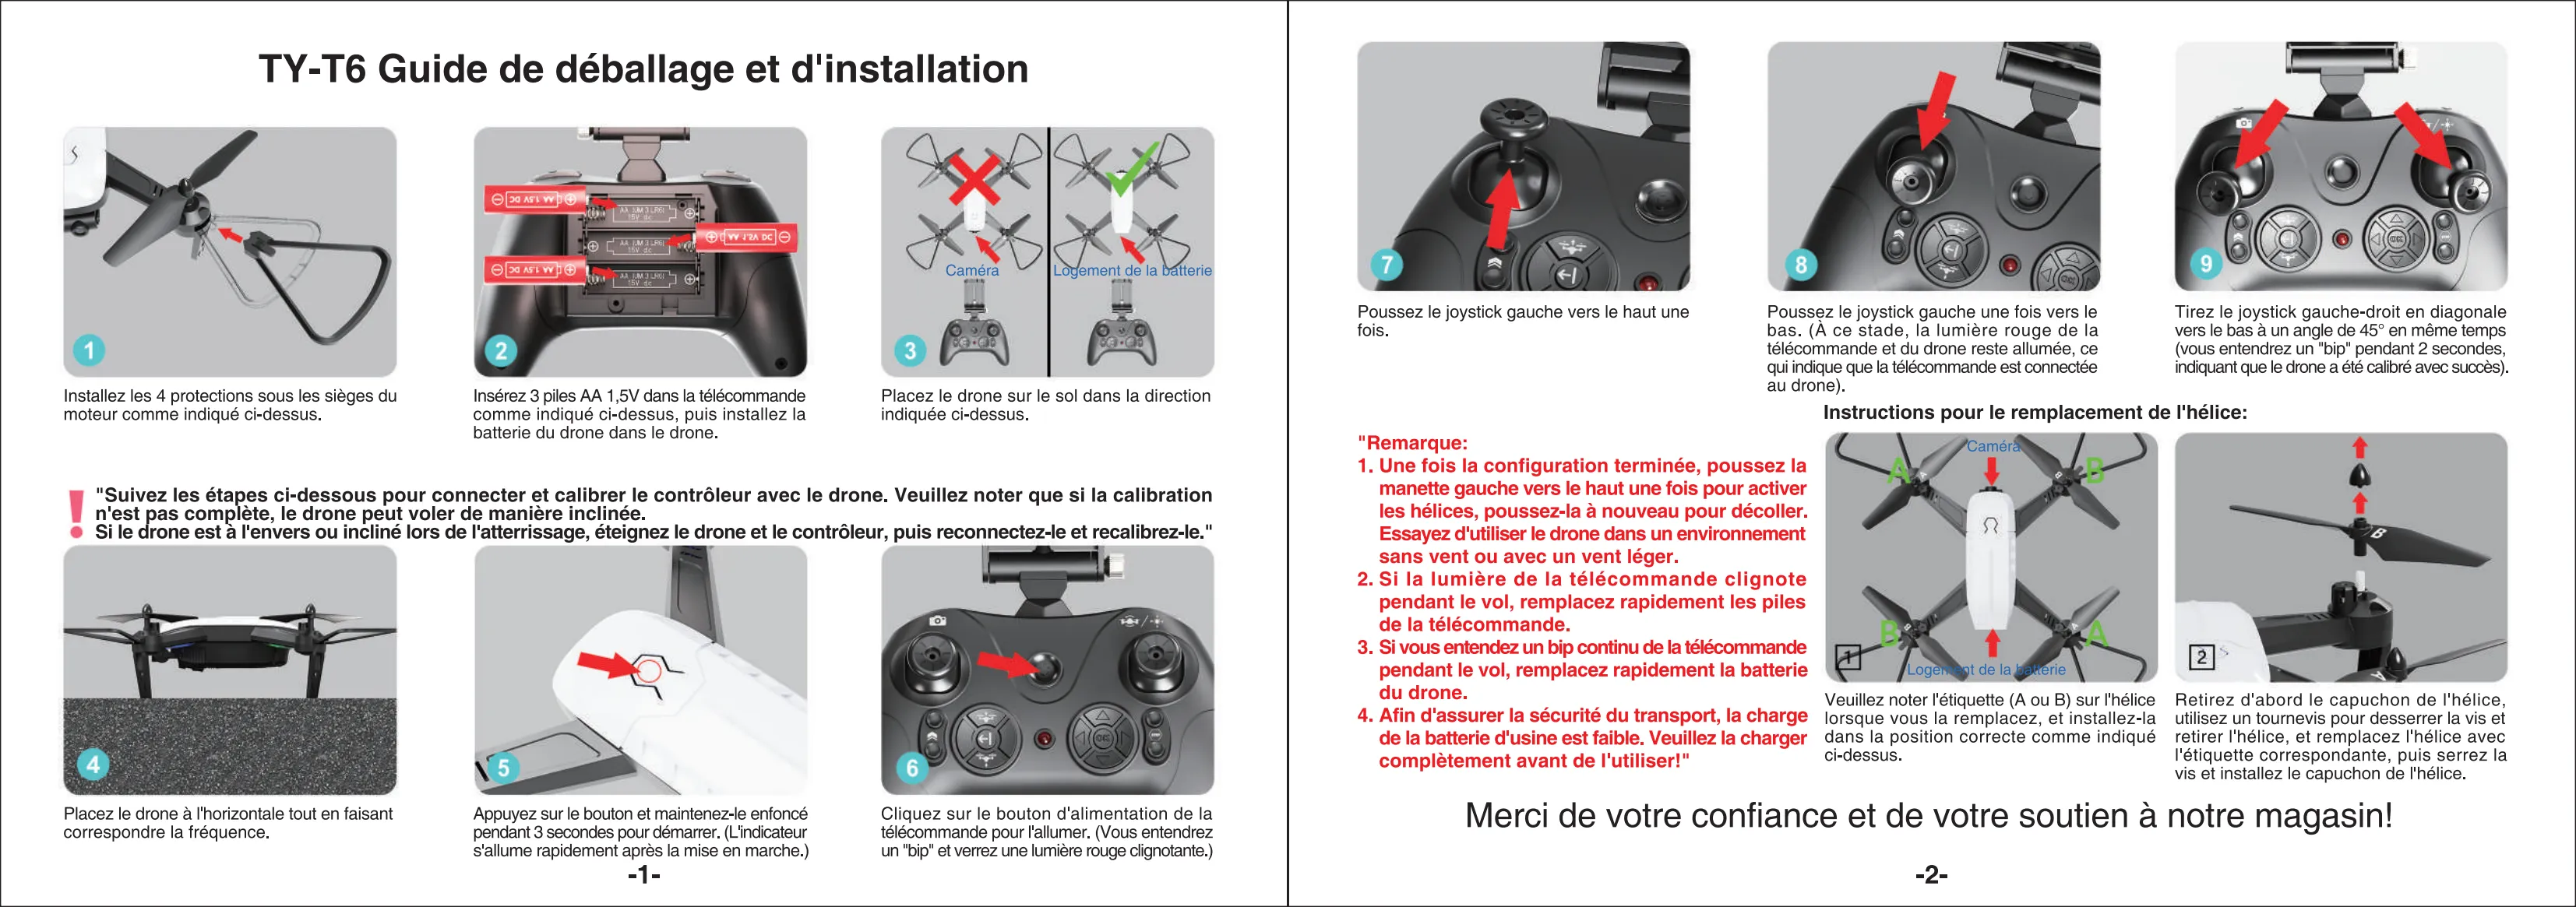 Istruzioni per l'uso per l'unboxing del drone T6